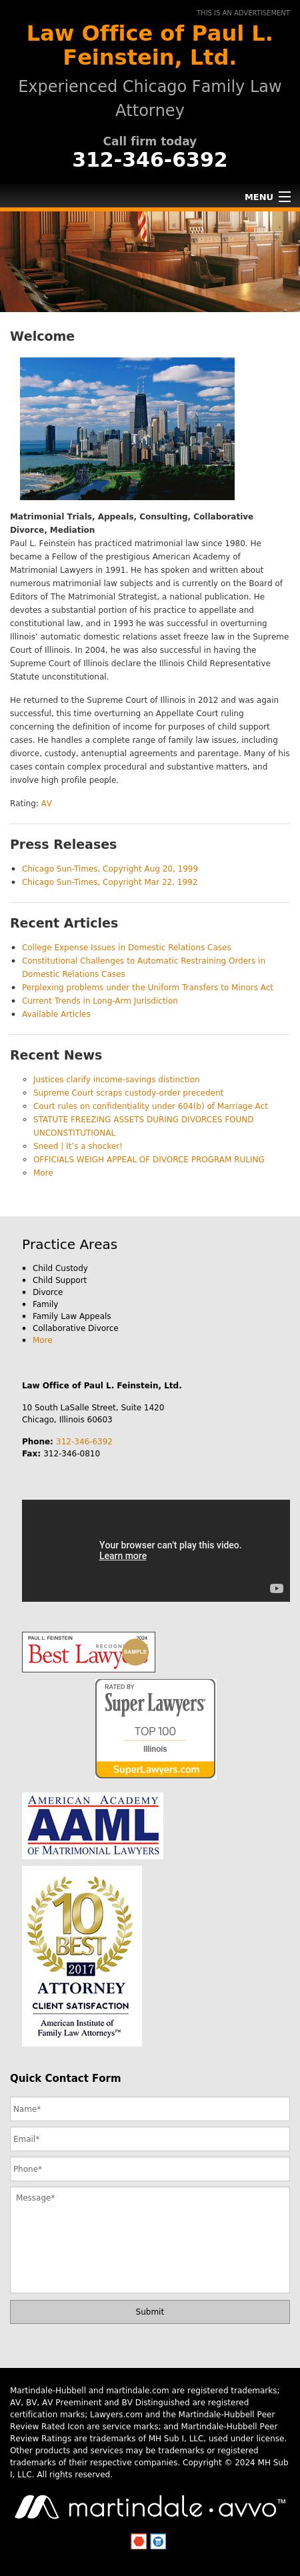 Law Office of Paul L. Feinstein, Ltd. - Chicago IL Lawyers